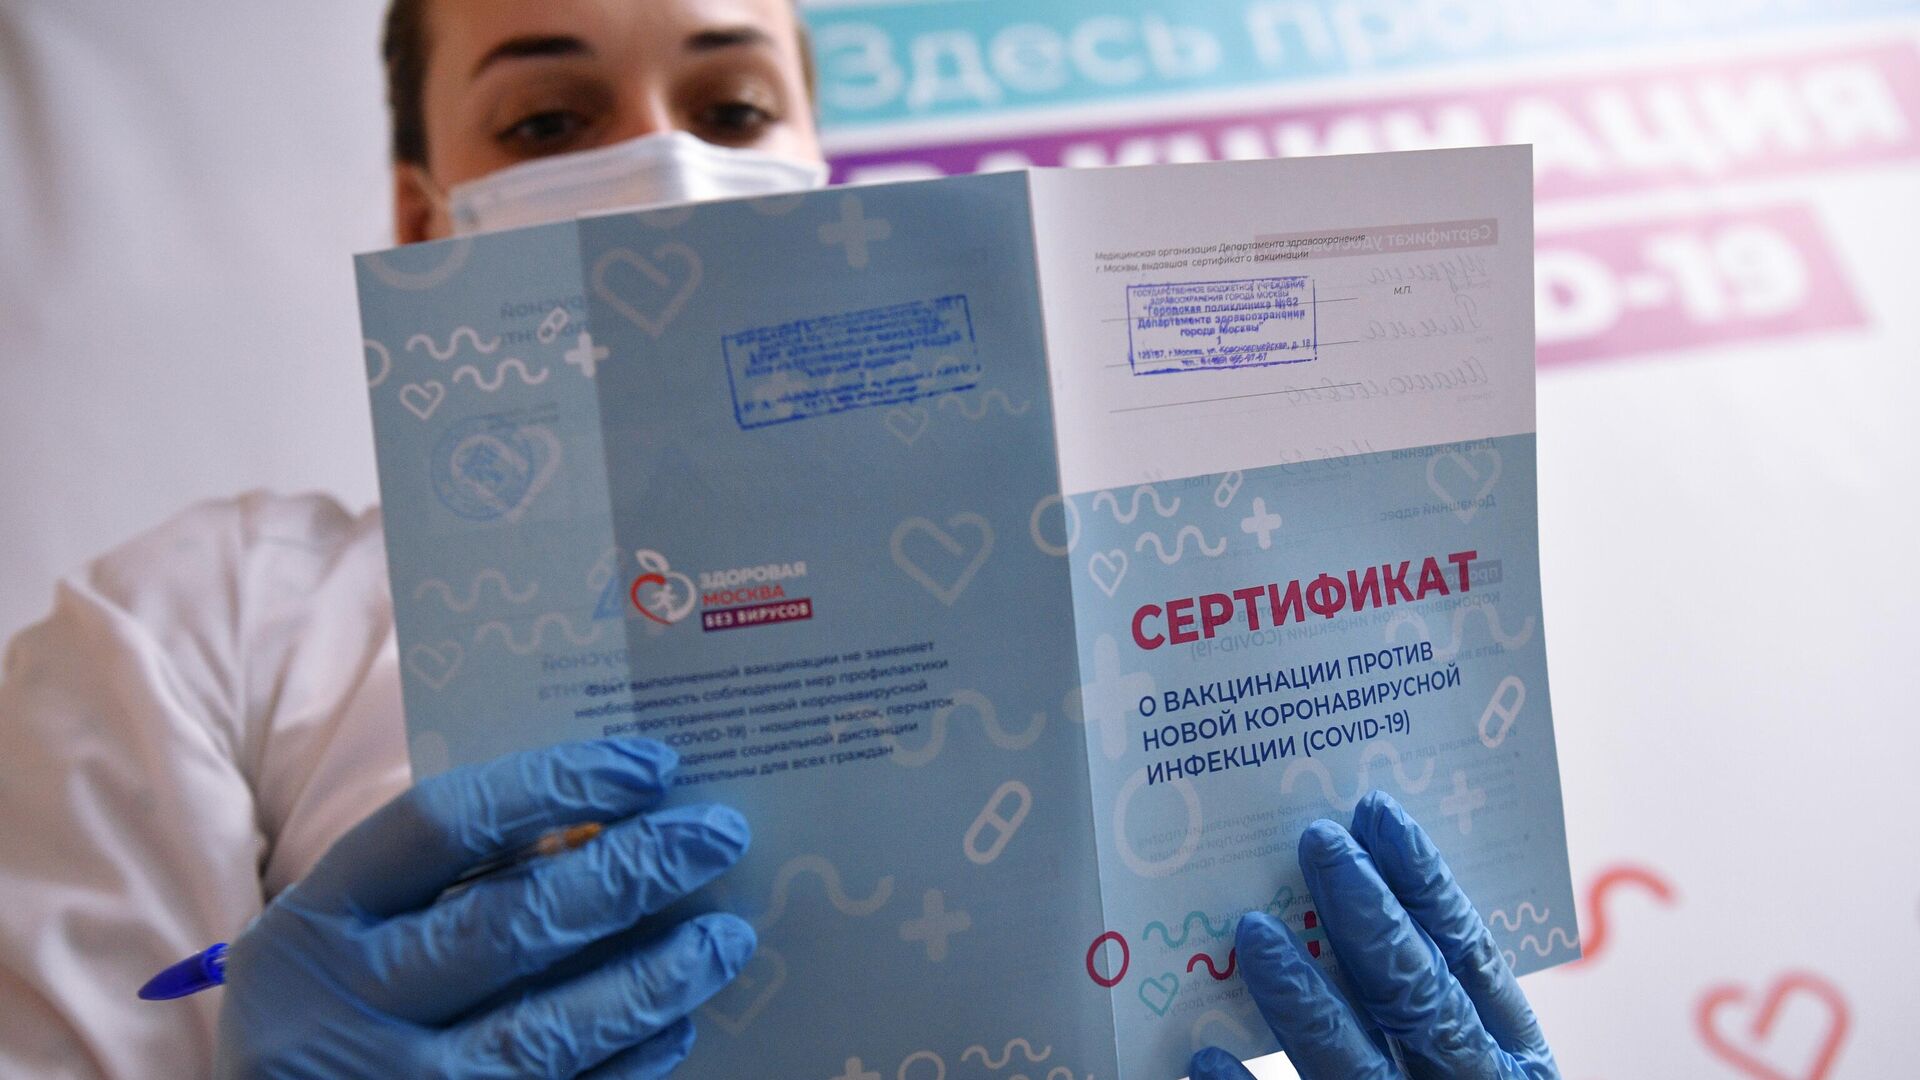 Сертификат о вакцинации против коронавирусной инфекции (COVID-19) - РИА Новости, 1920, 27.08.2021